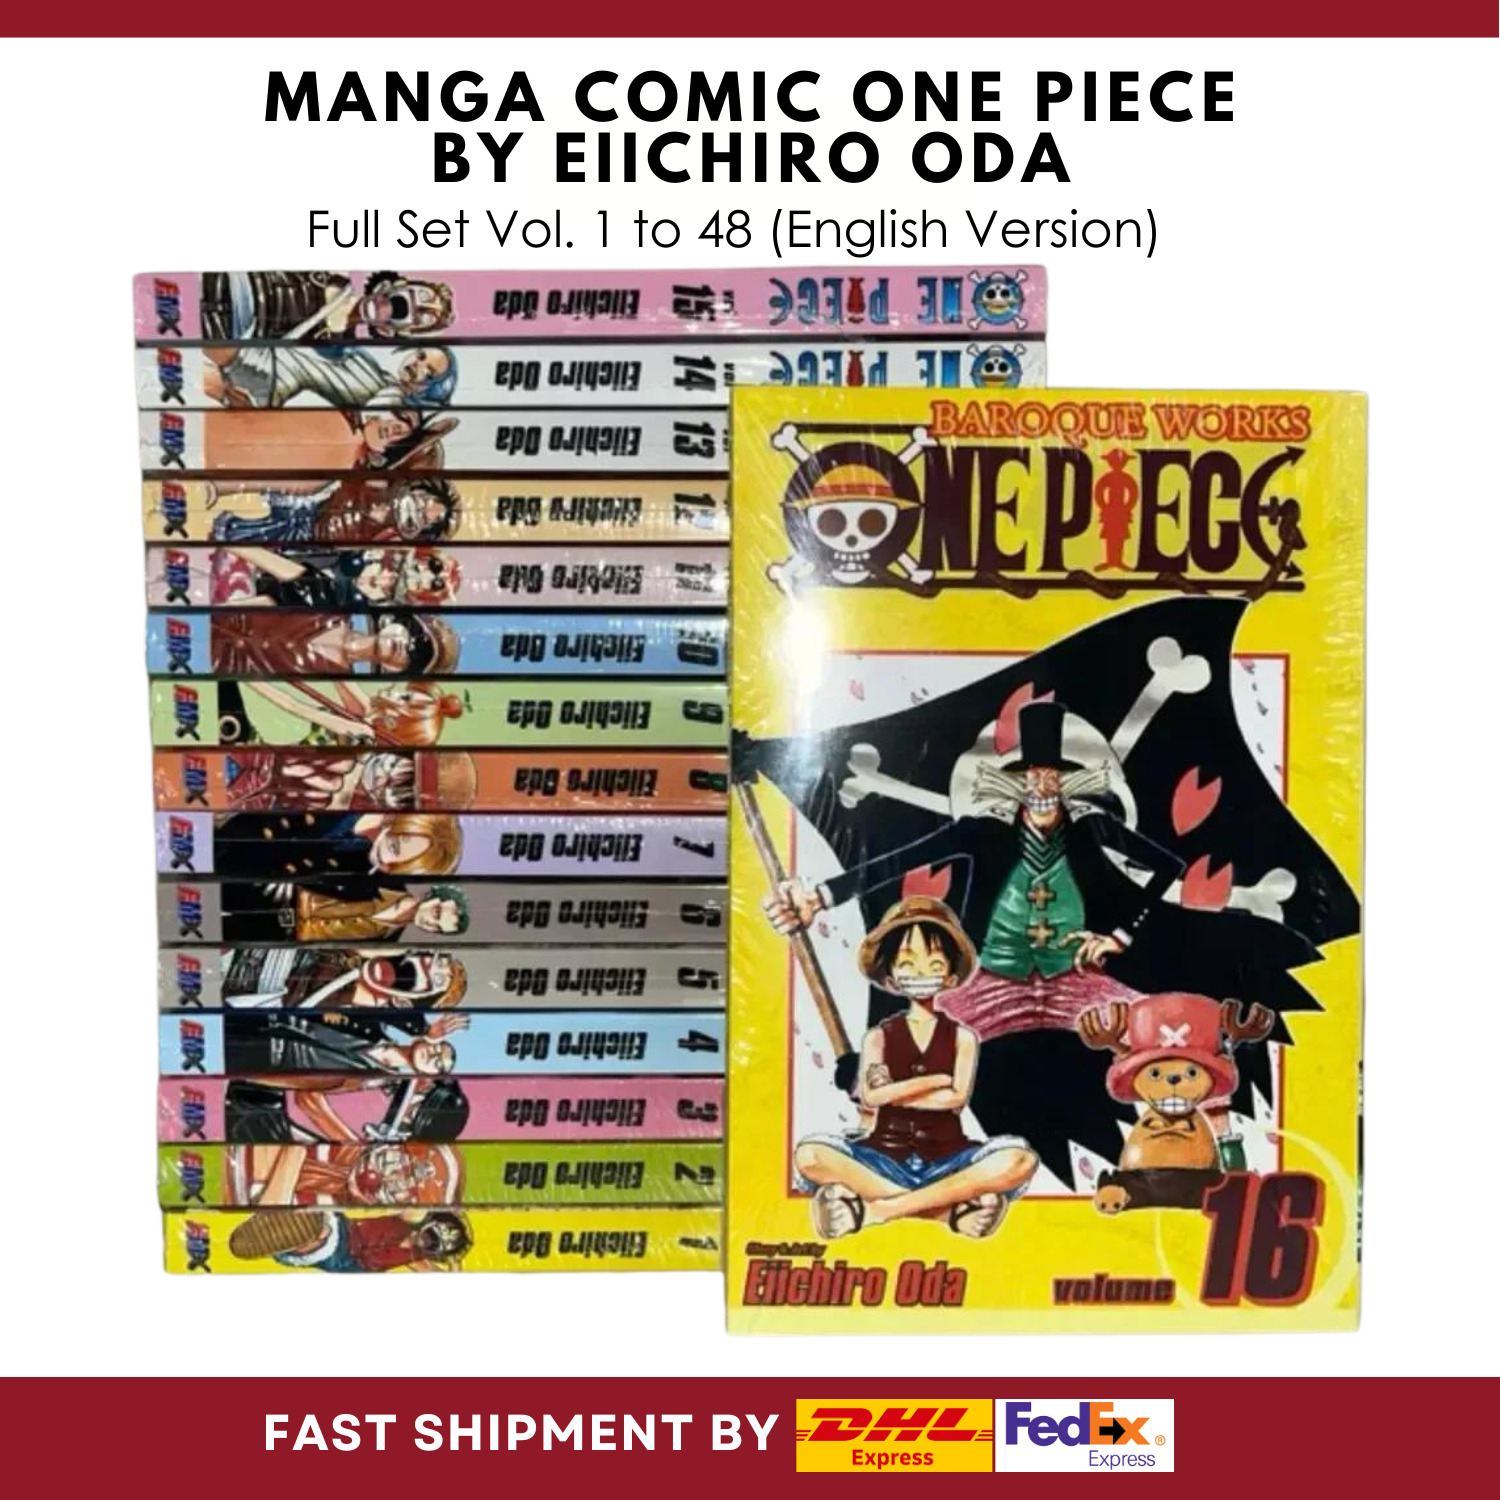 One Piece Manga Comic (Vol 1 - 48 End) Full English Version + DHL Express